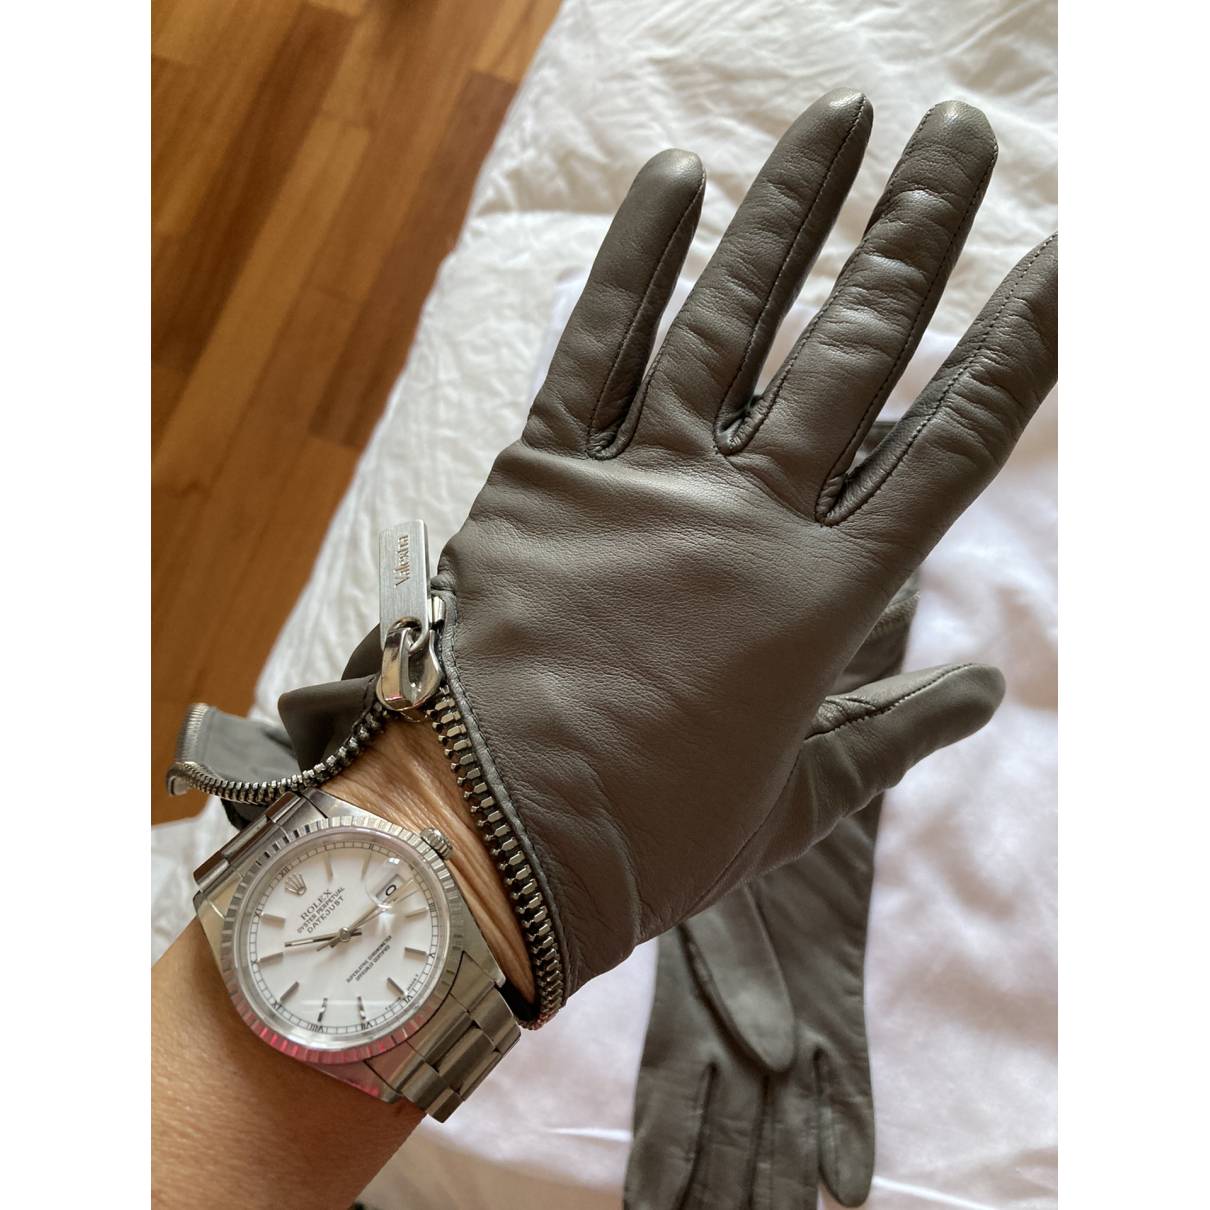 Leather gloves Valextra